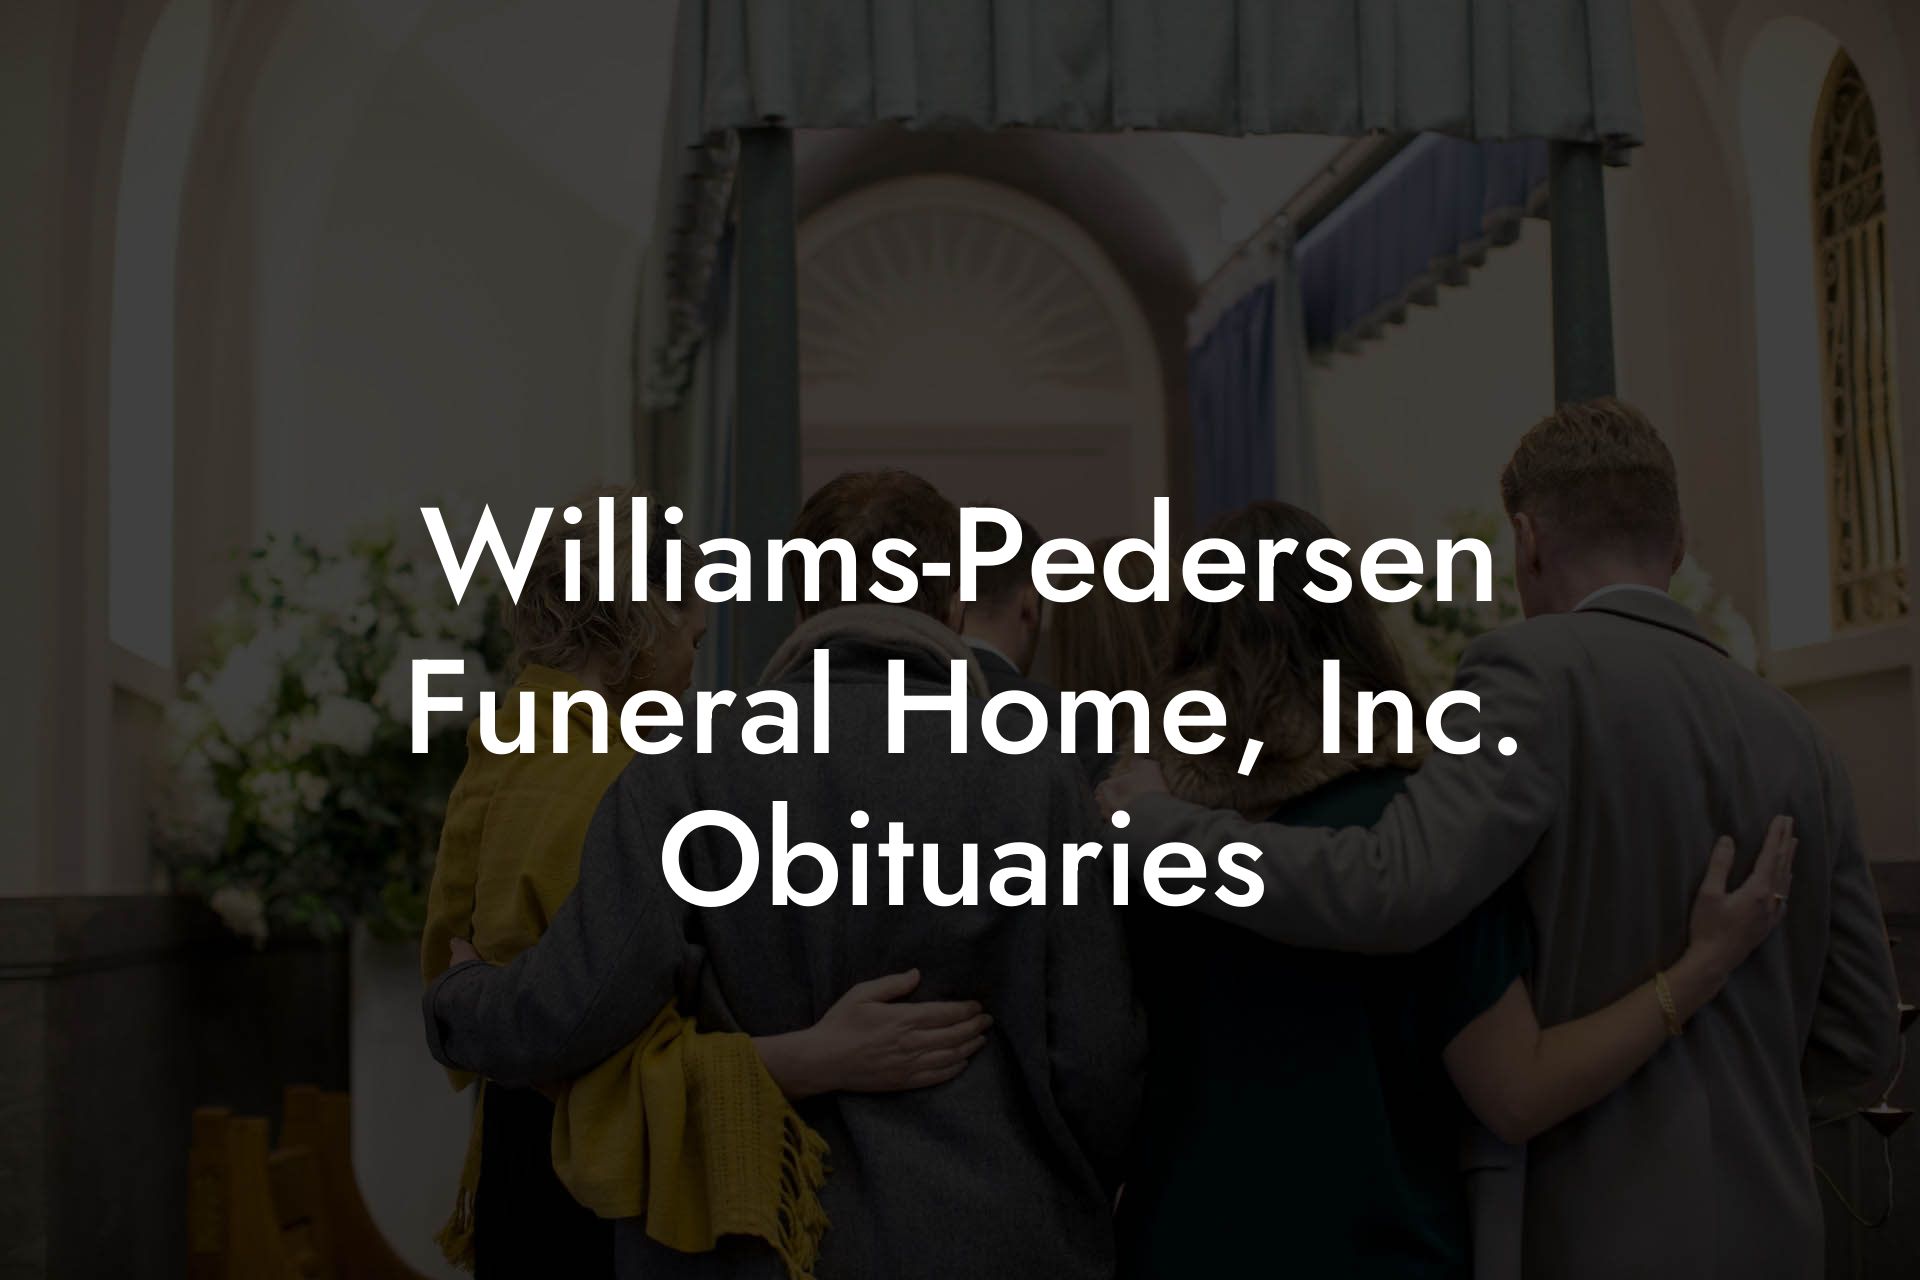 Williams-Pedersen Funeral Home, Inc. Obituaries